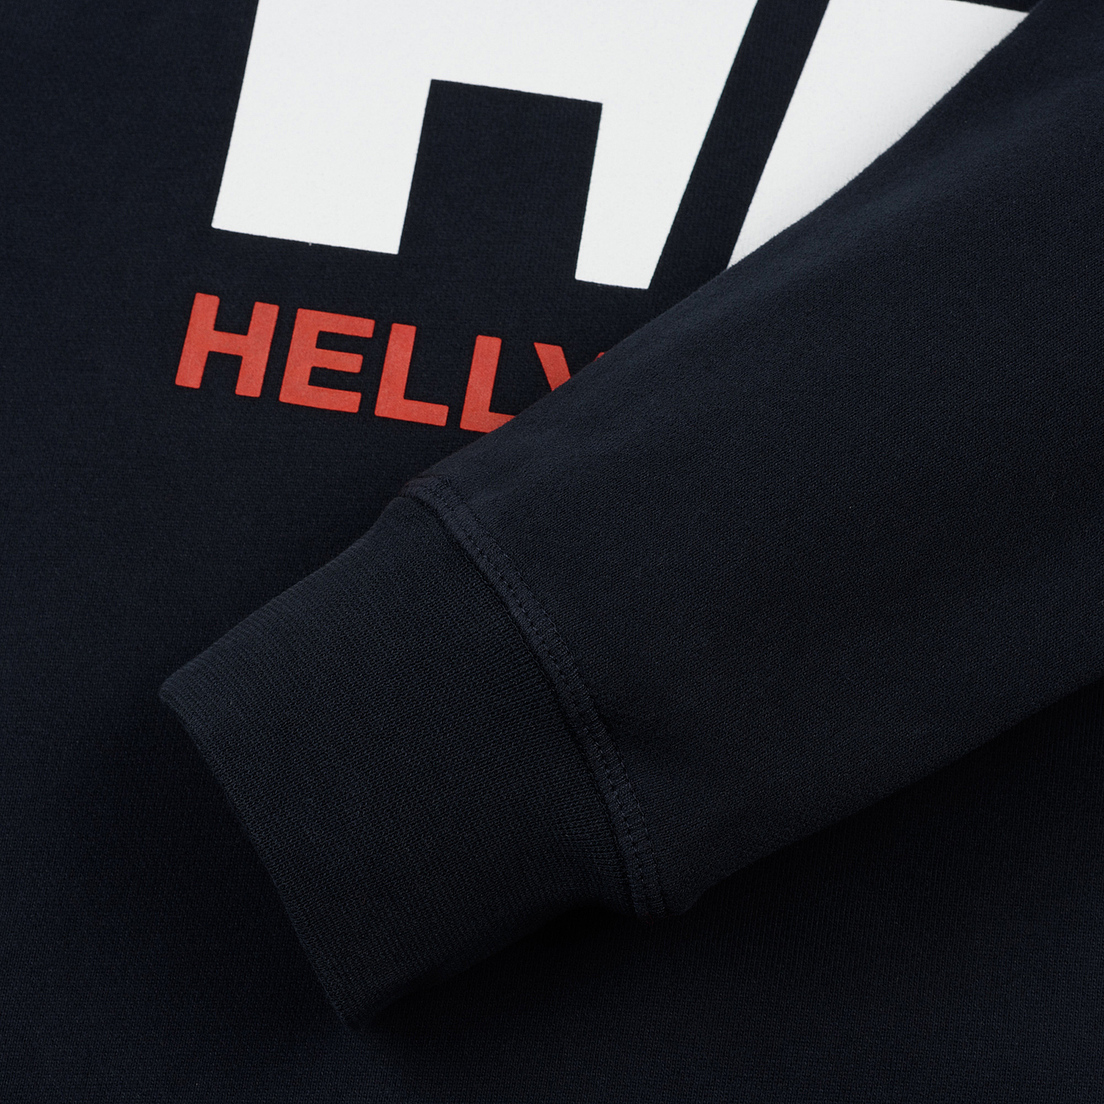 Helly Hansen Женская толстовка HH Logo Crew